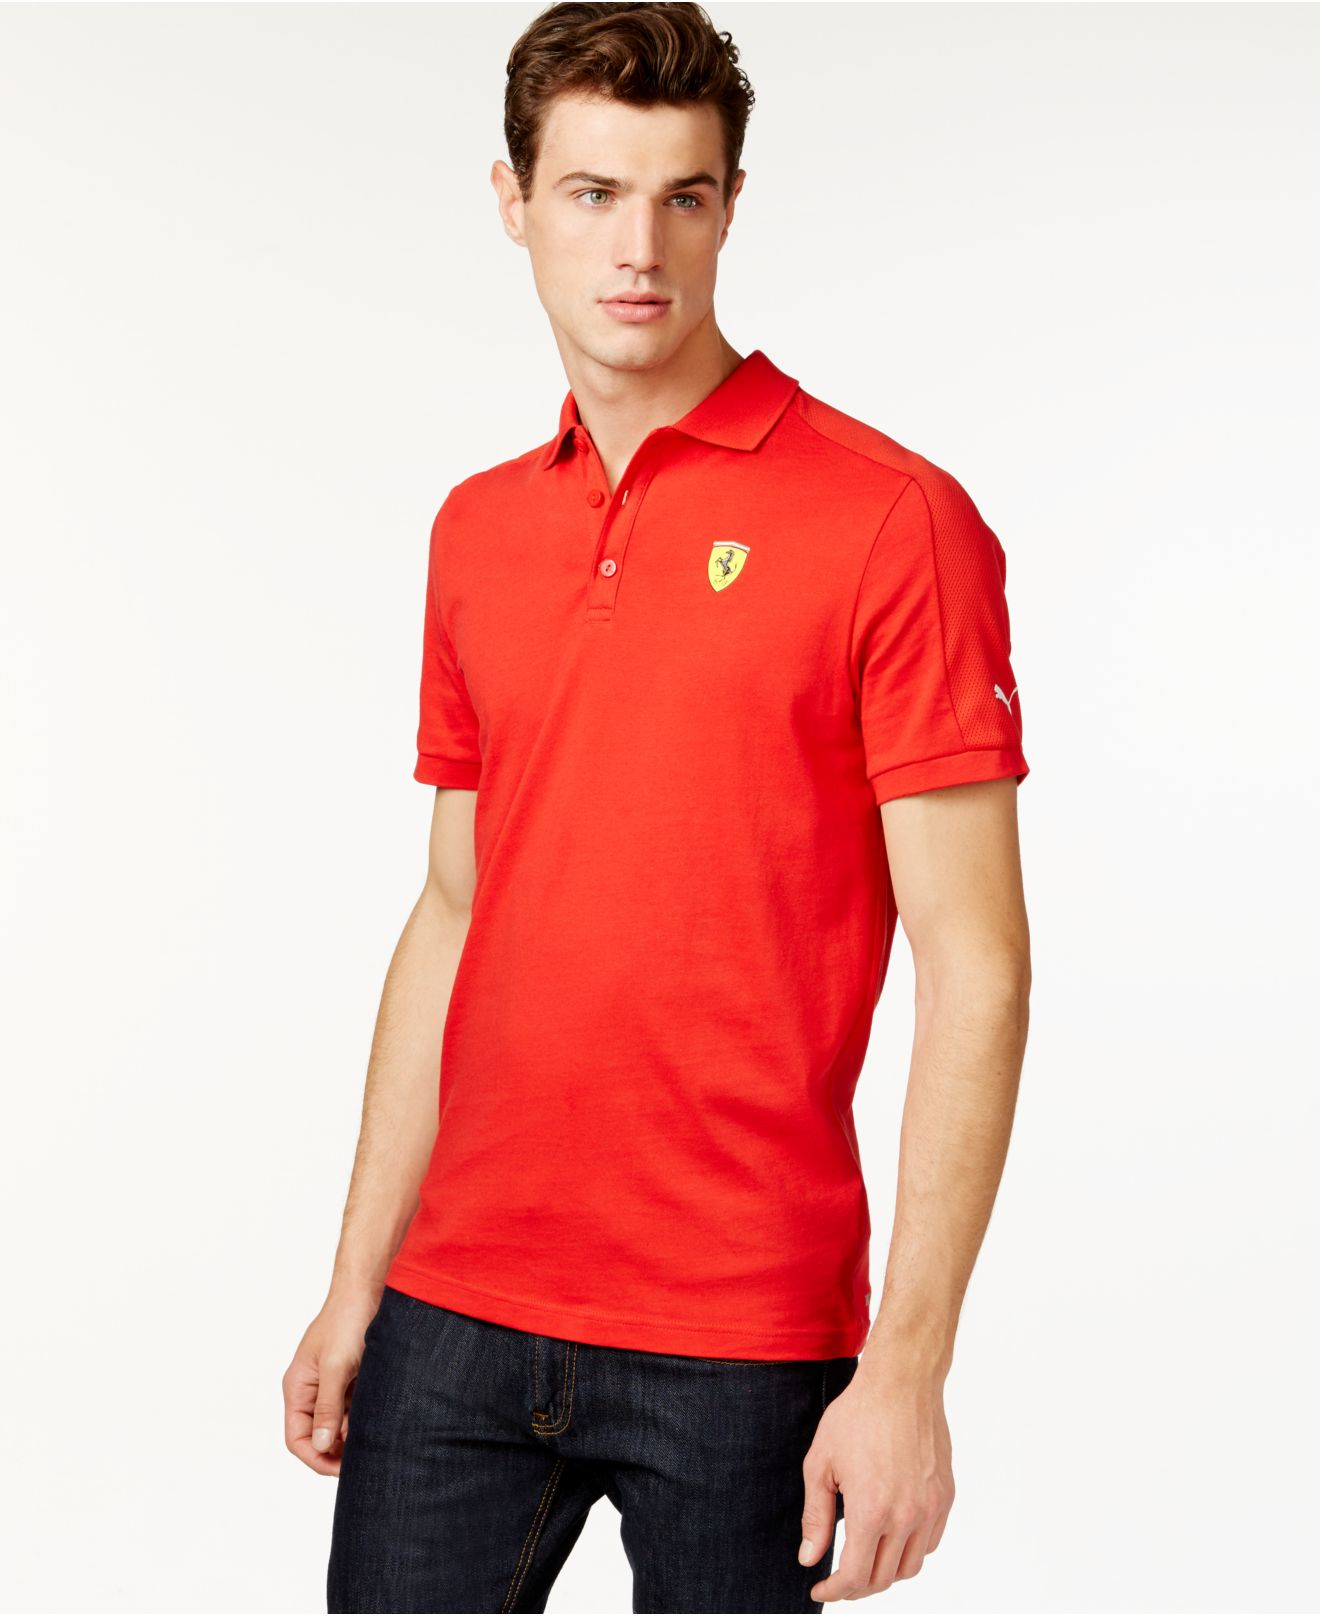 Lyst - Puma Men's Ferrari Polo Shirt in Red for Men